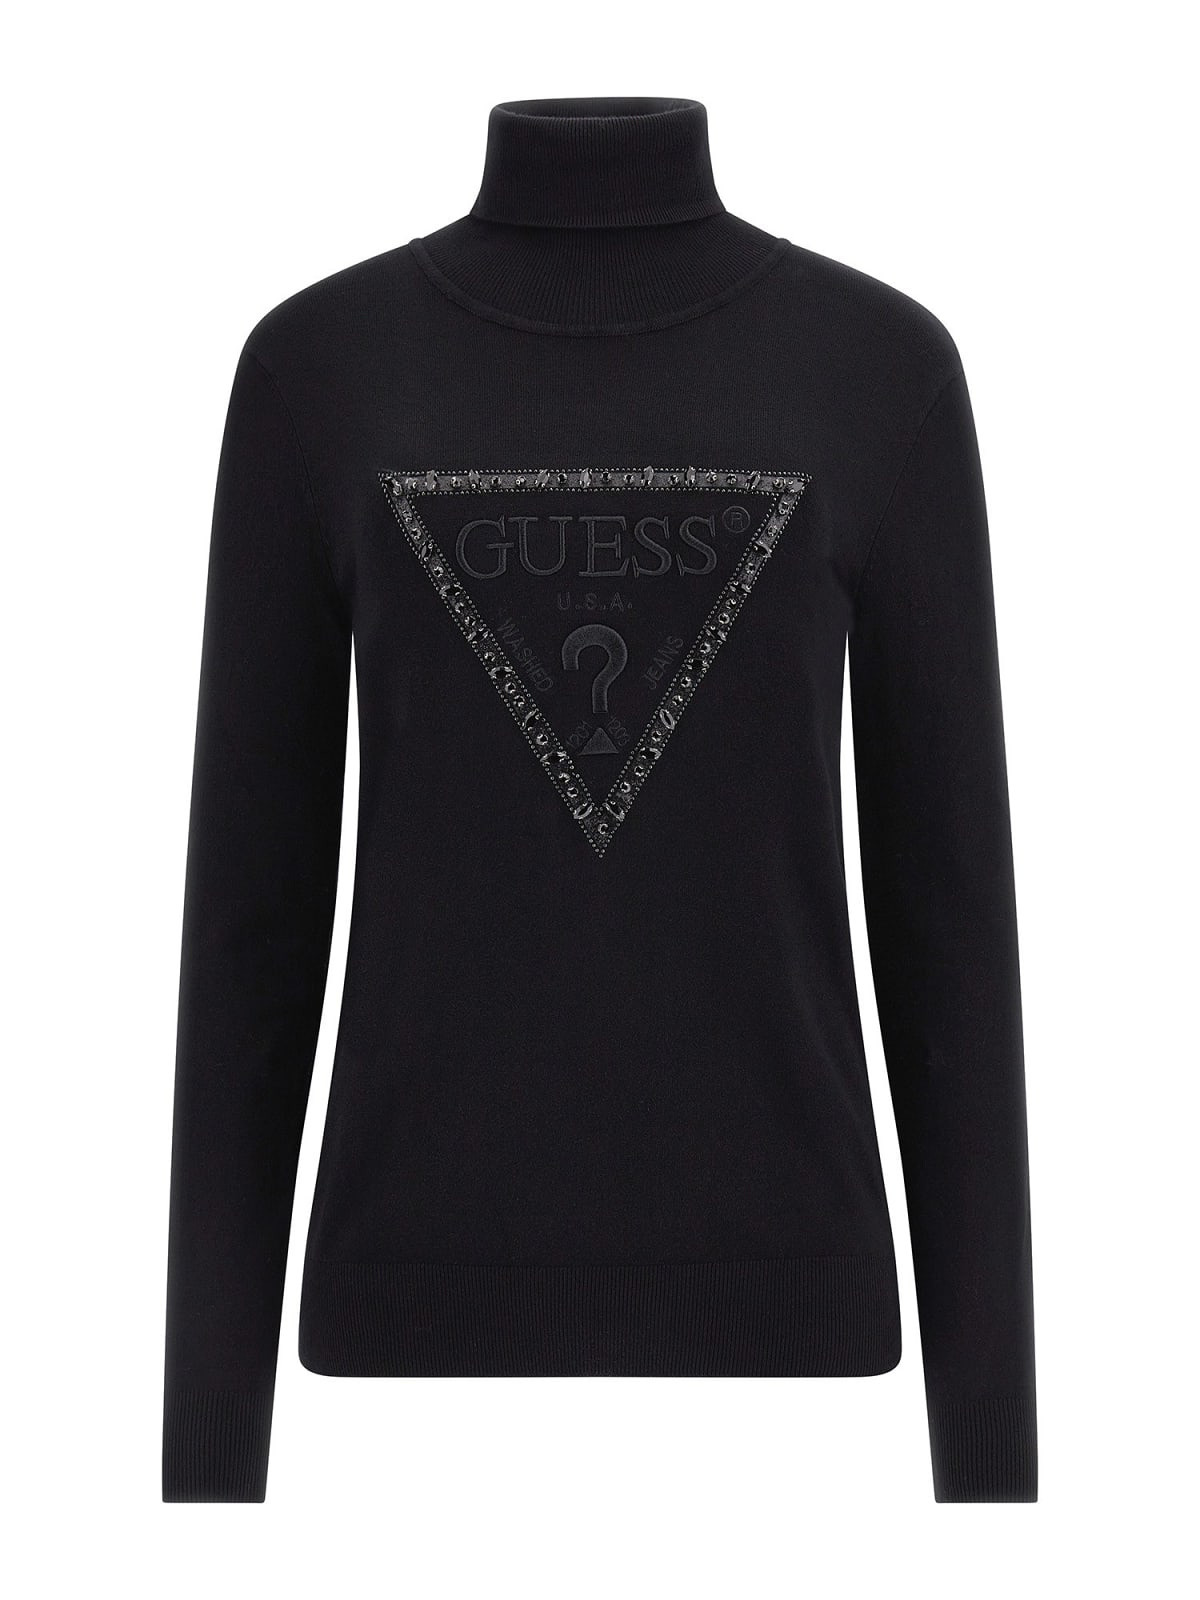 Triangle logo sweater with rhinestones, Black, large image number 0